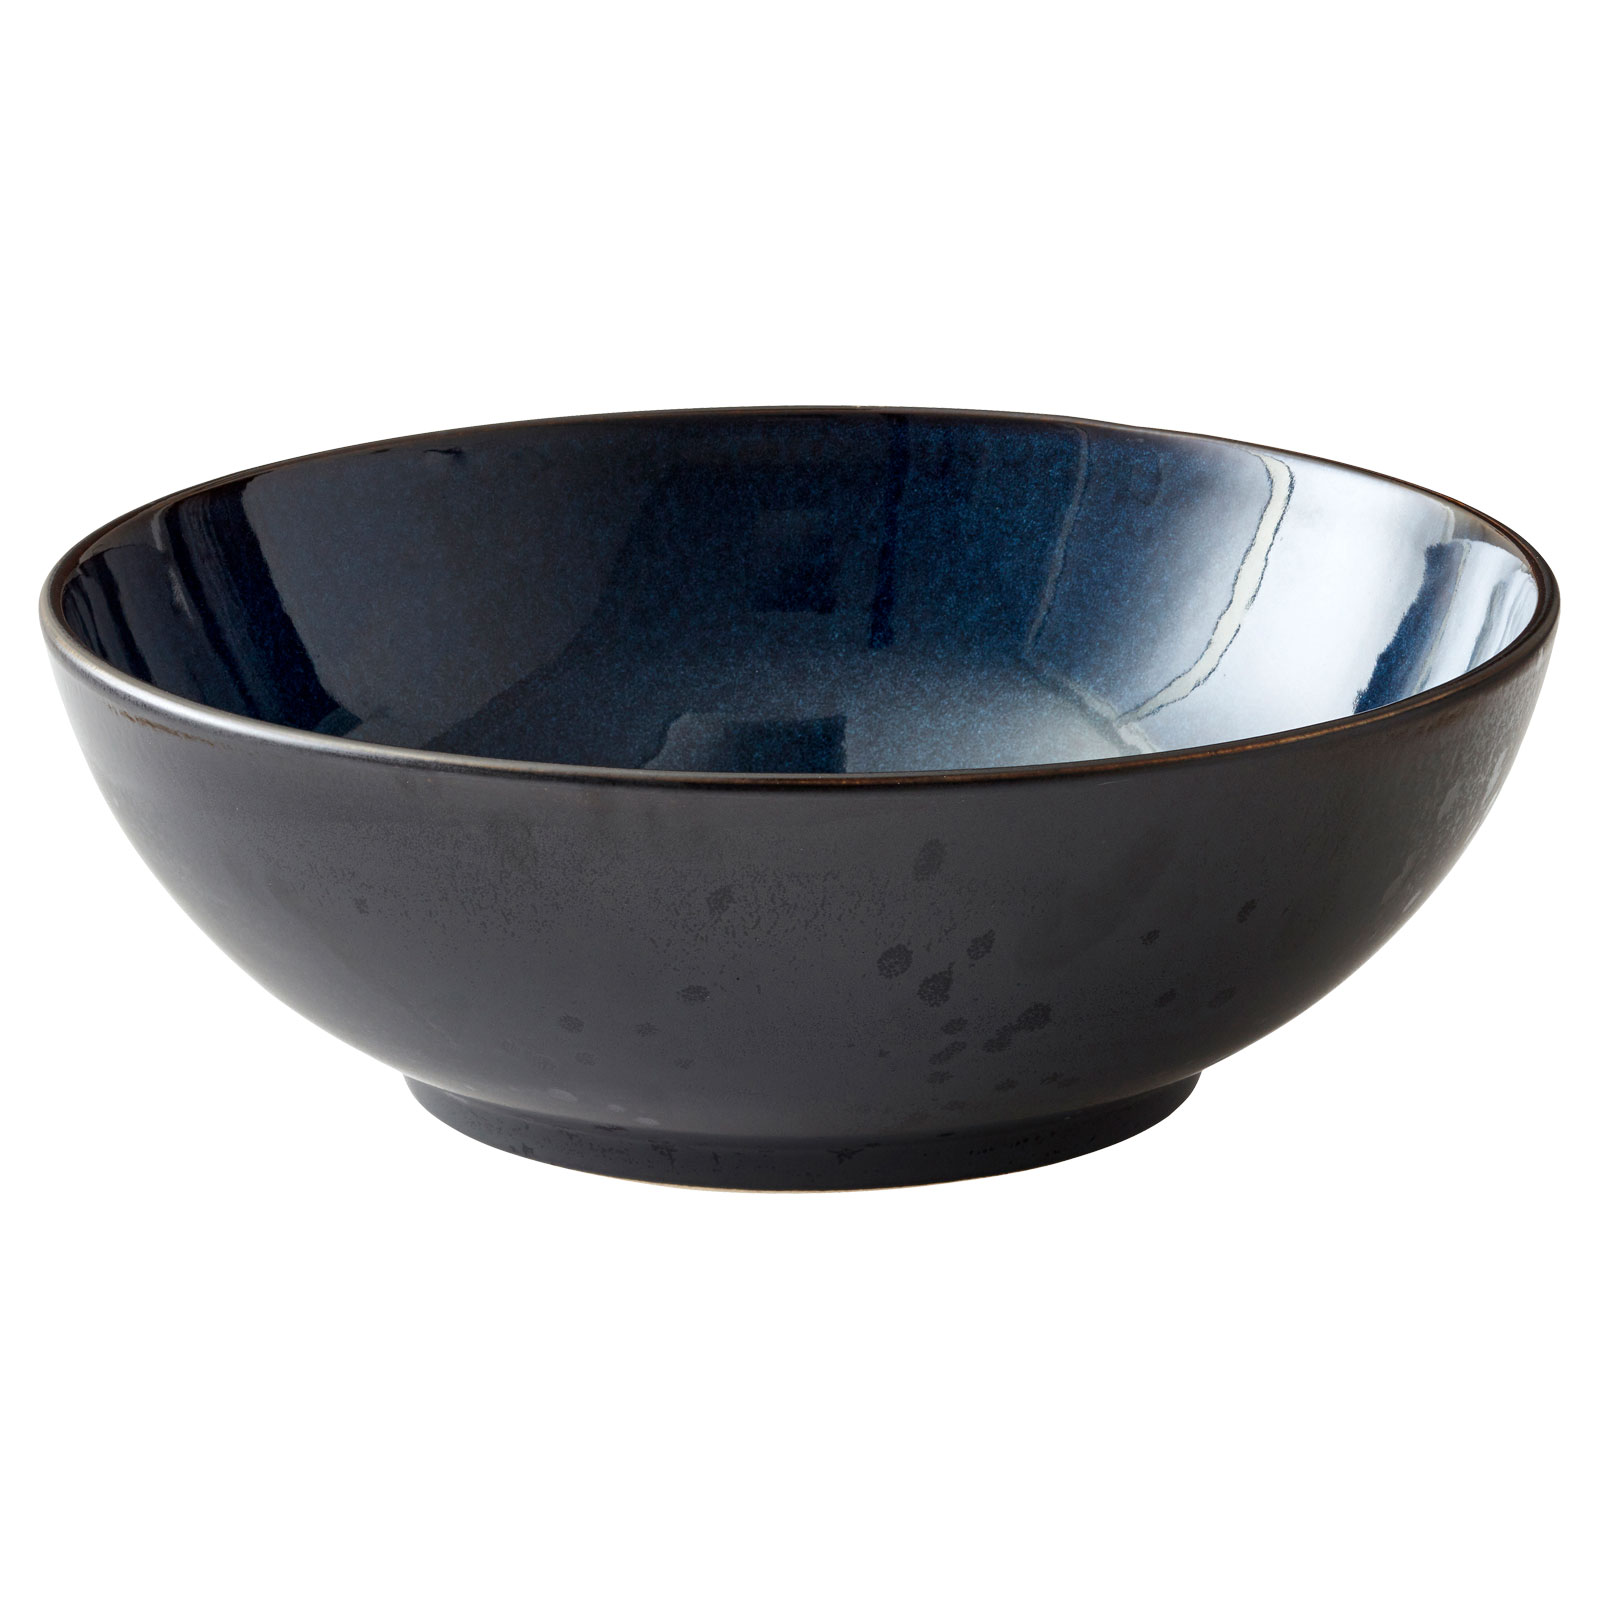 Bitz Salatschale 30cm black/dark blue Keramik